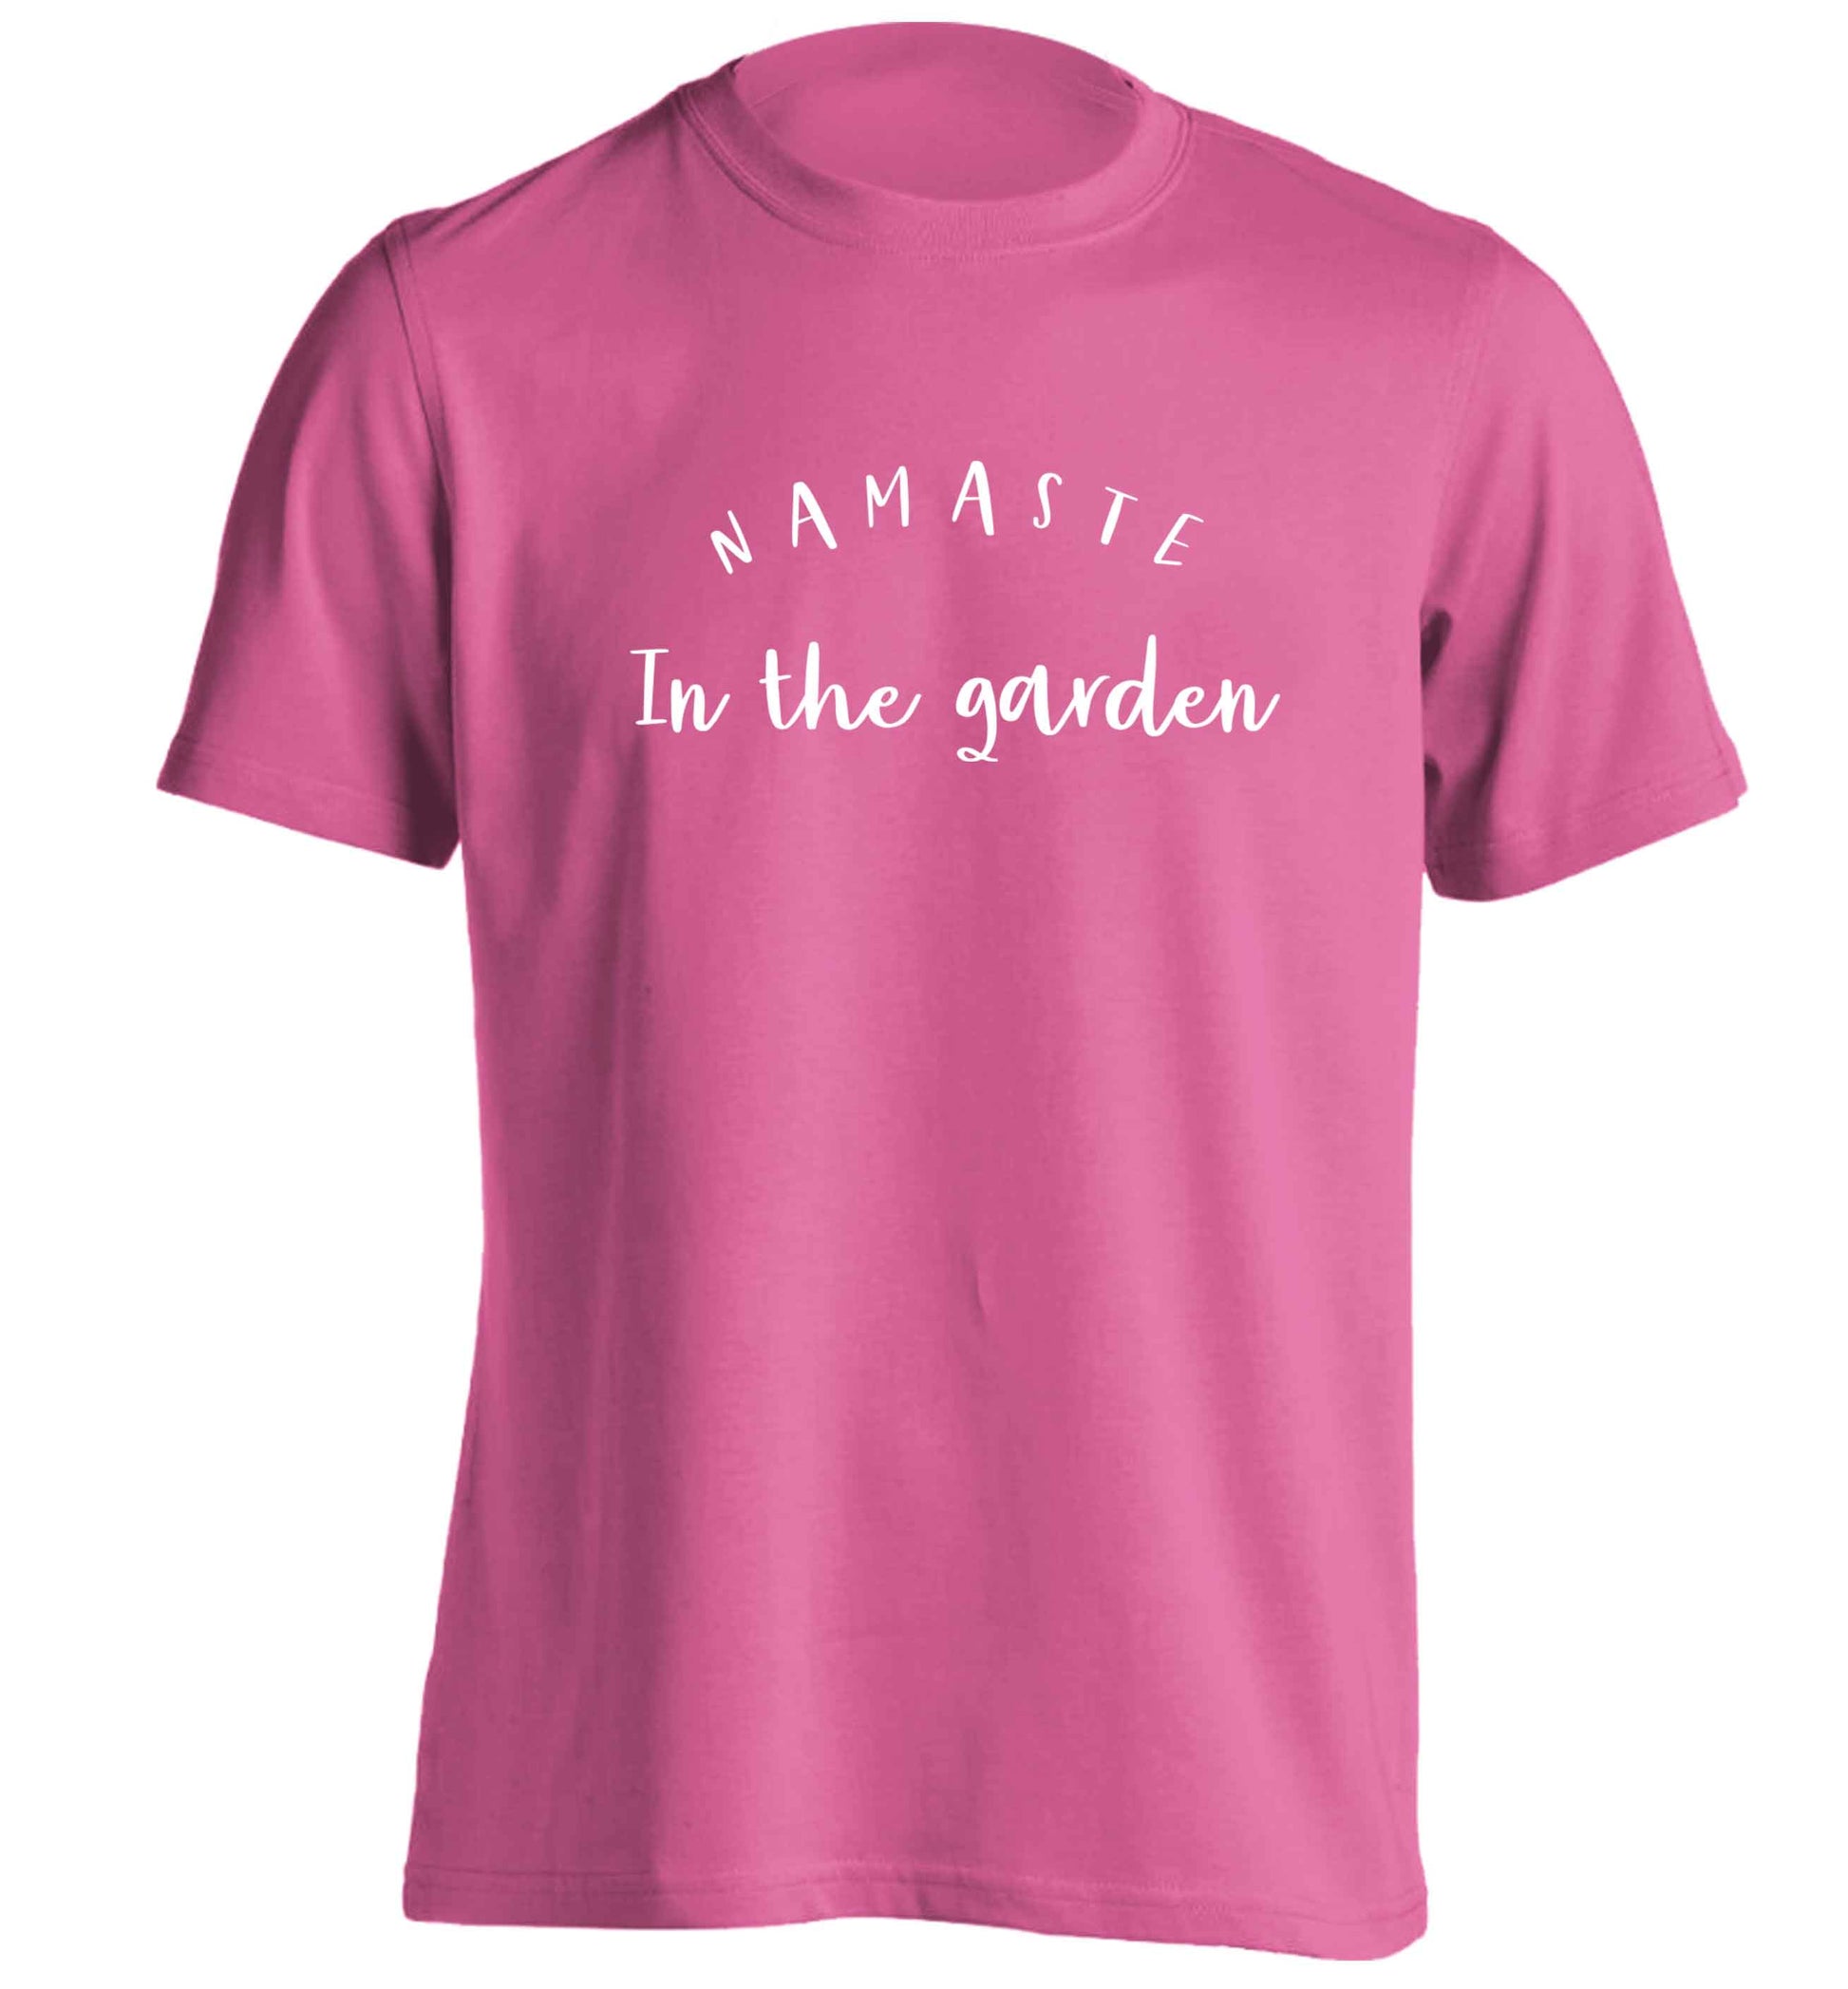 Namaste in the garden adults unisex pink Tshirt 2XL